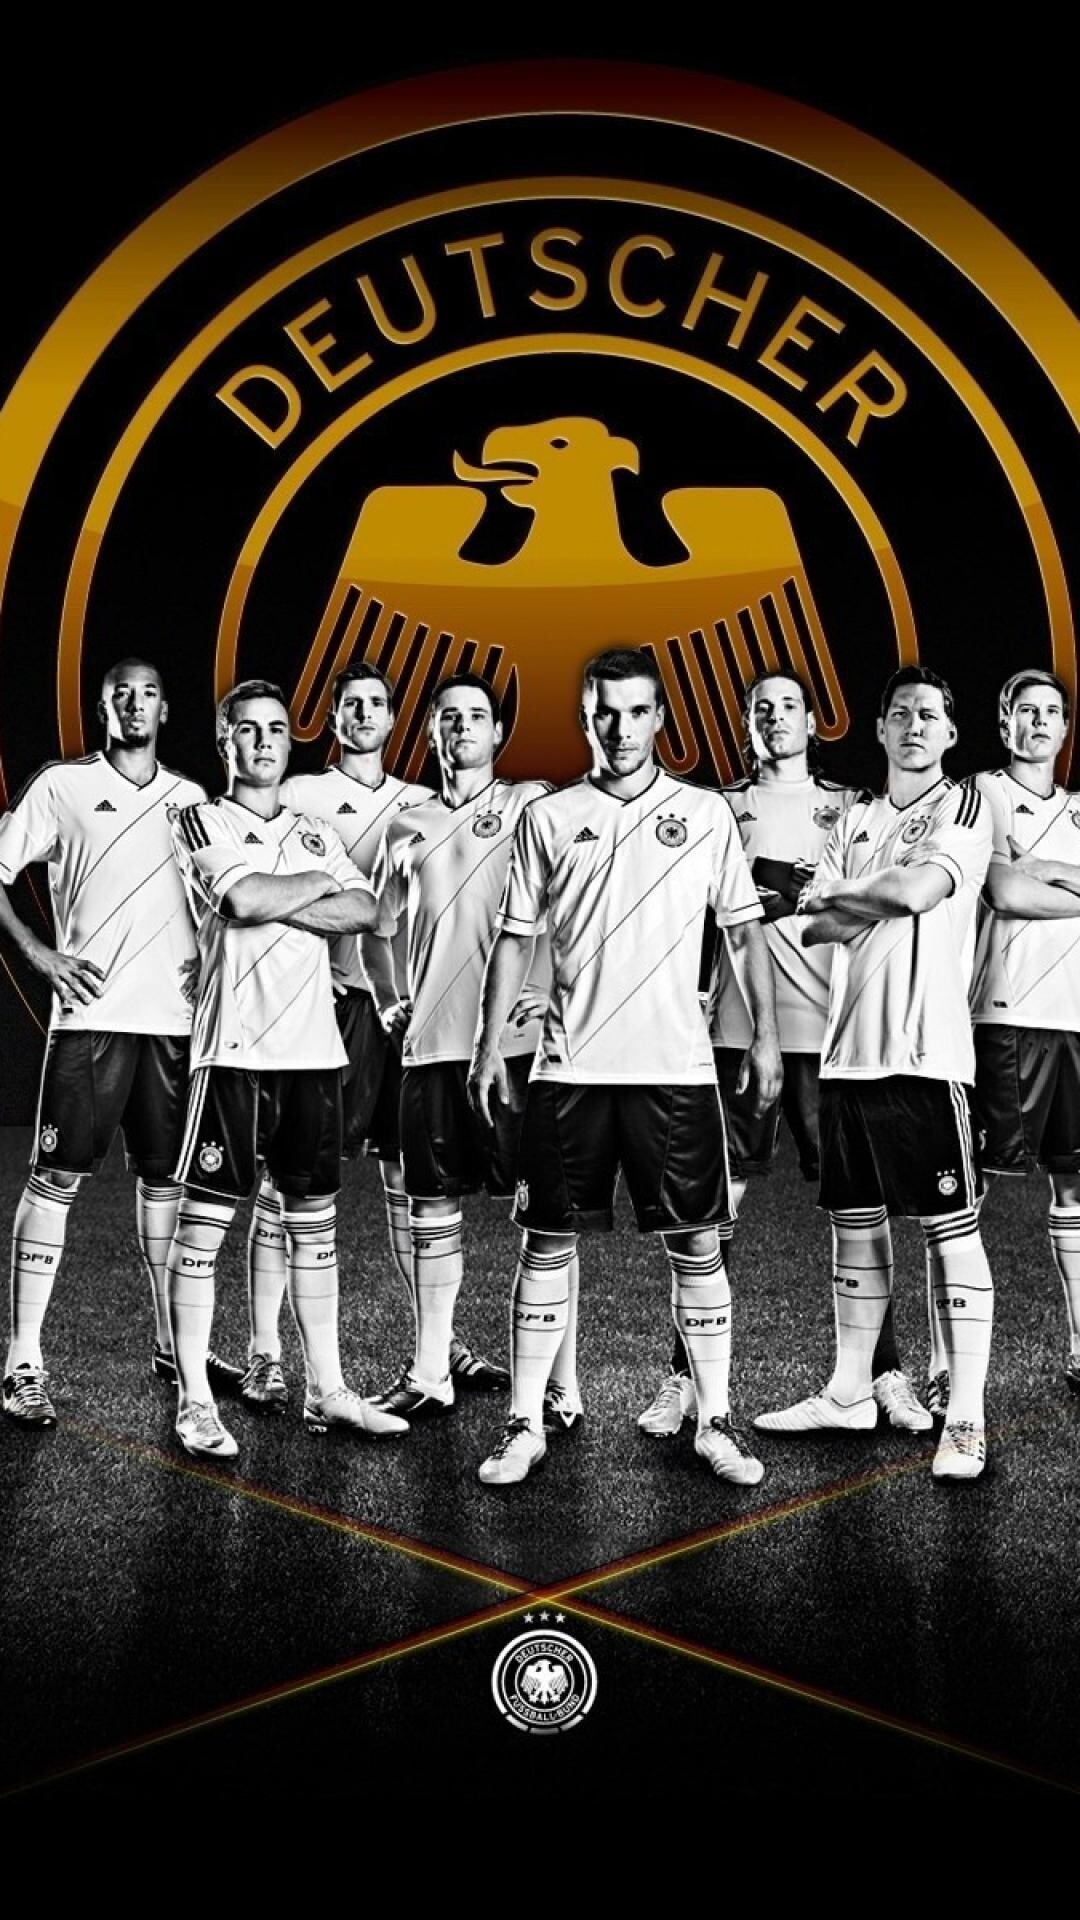 Germany Soccer Team: Bastian Schweinsteiger, Mario Gotze, Monochrome professional footballers, Football championship winners. 1080x1920 Full HD Background.